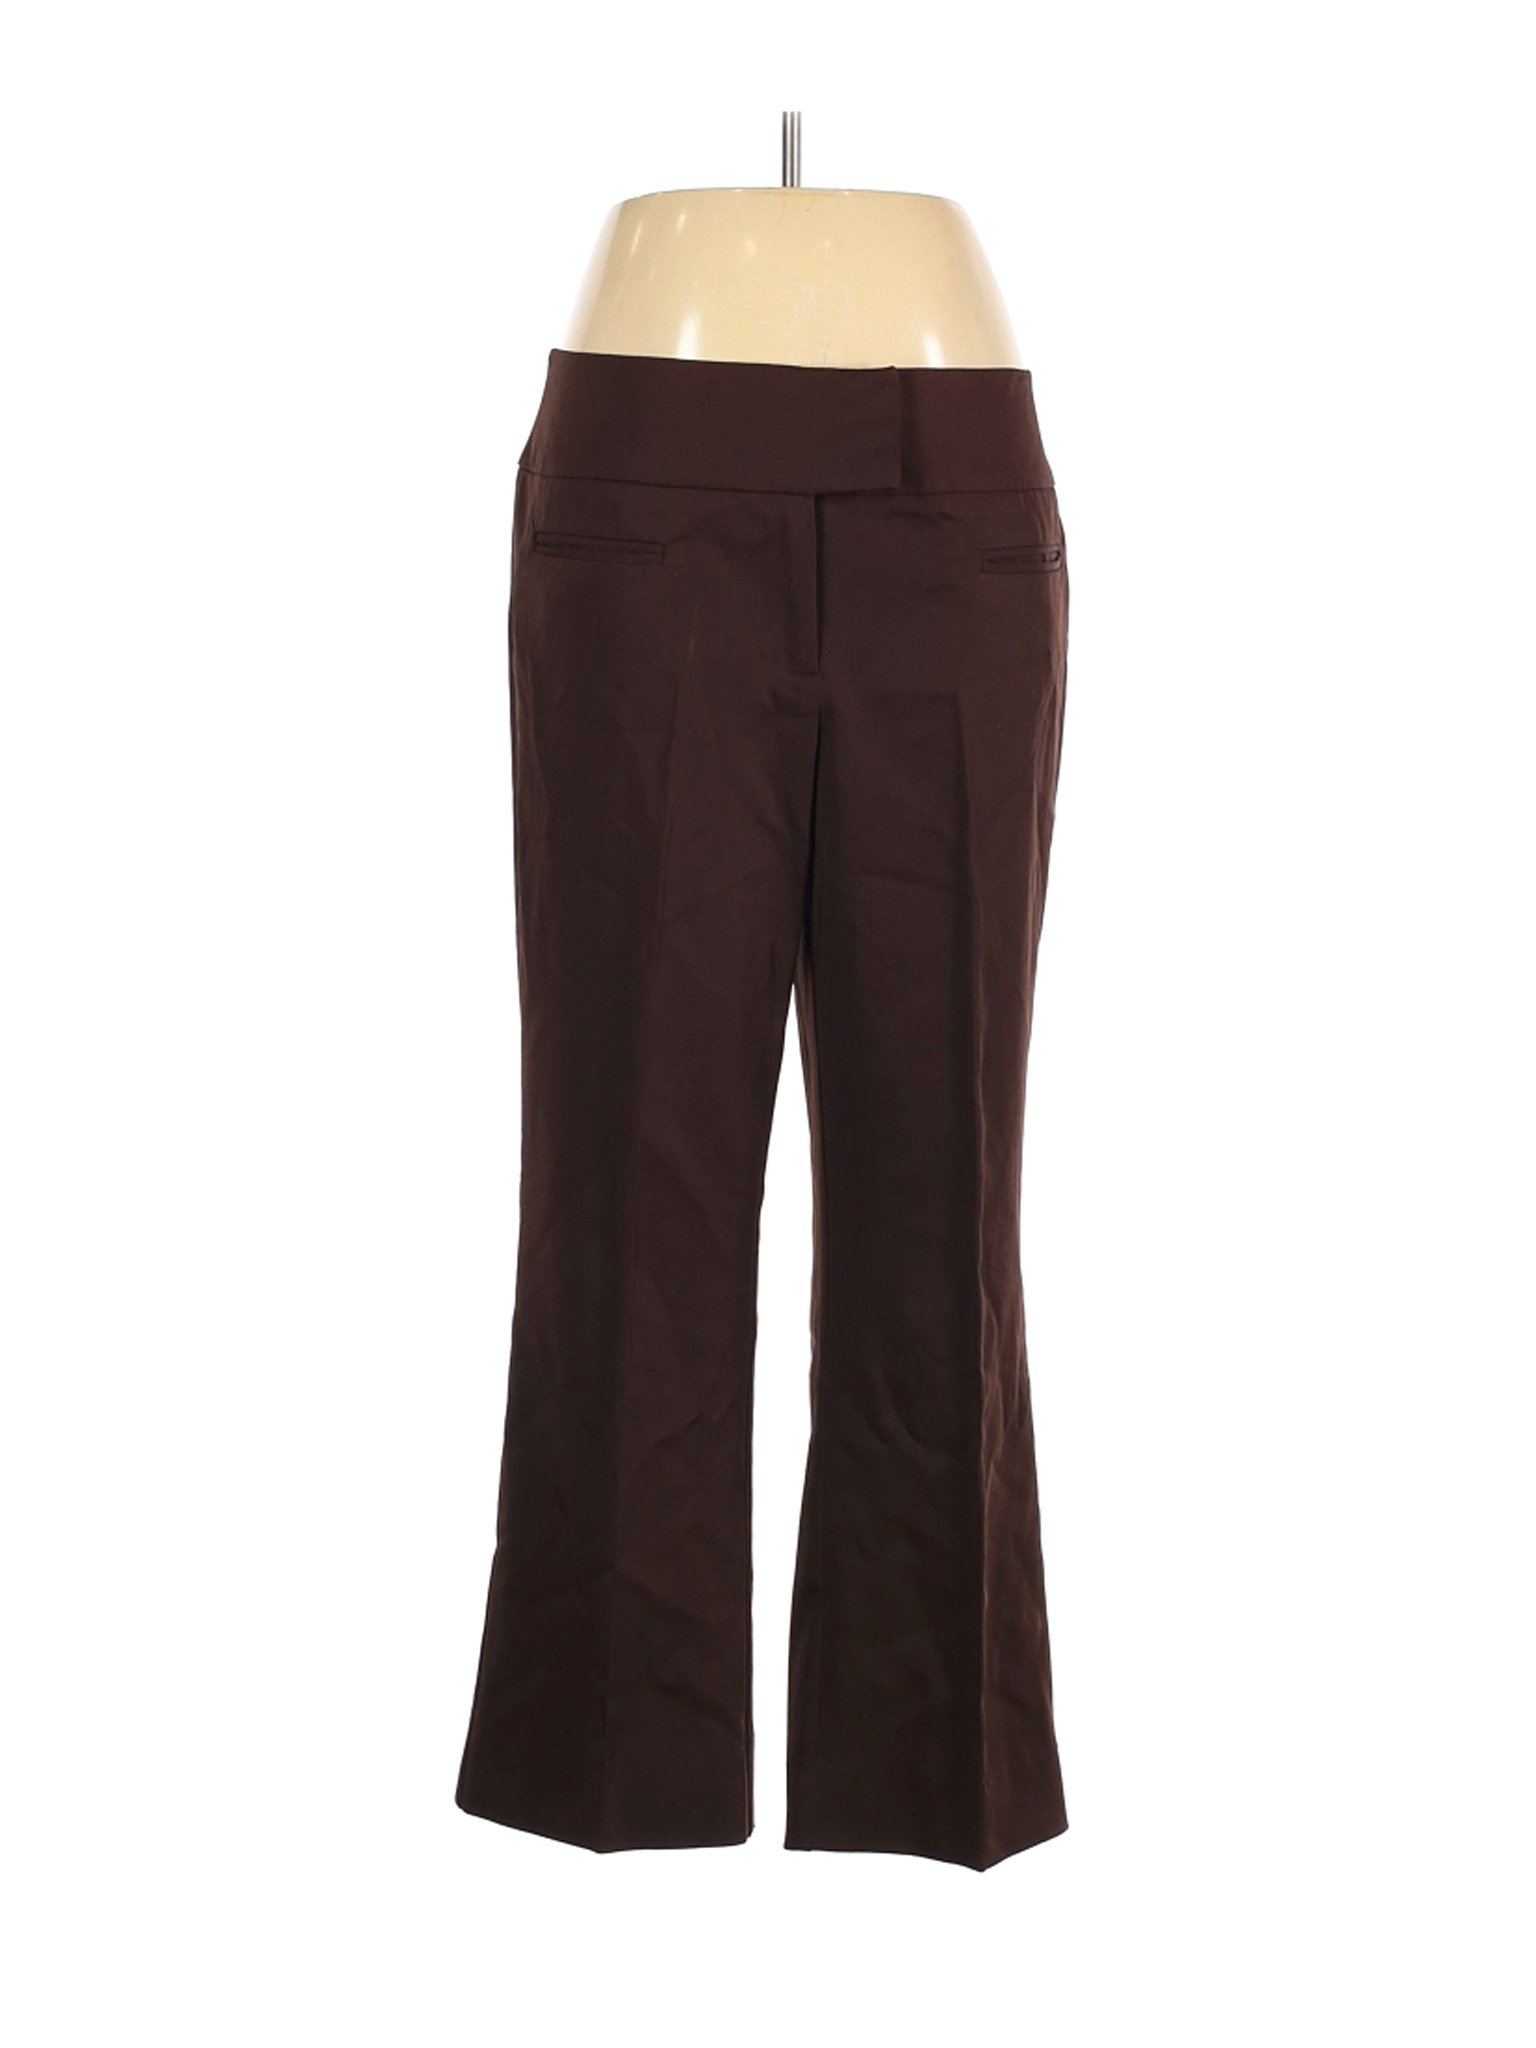 Bobby J Women Brown Dress Pants 10 | eBay